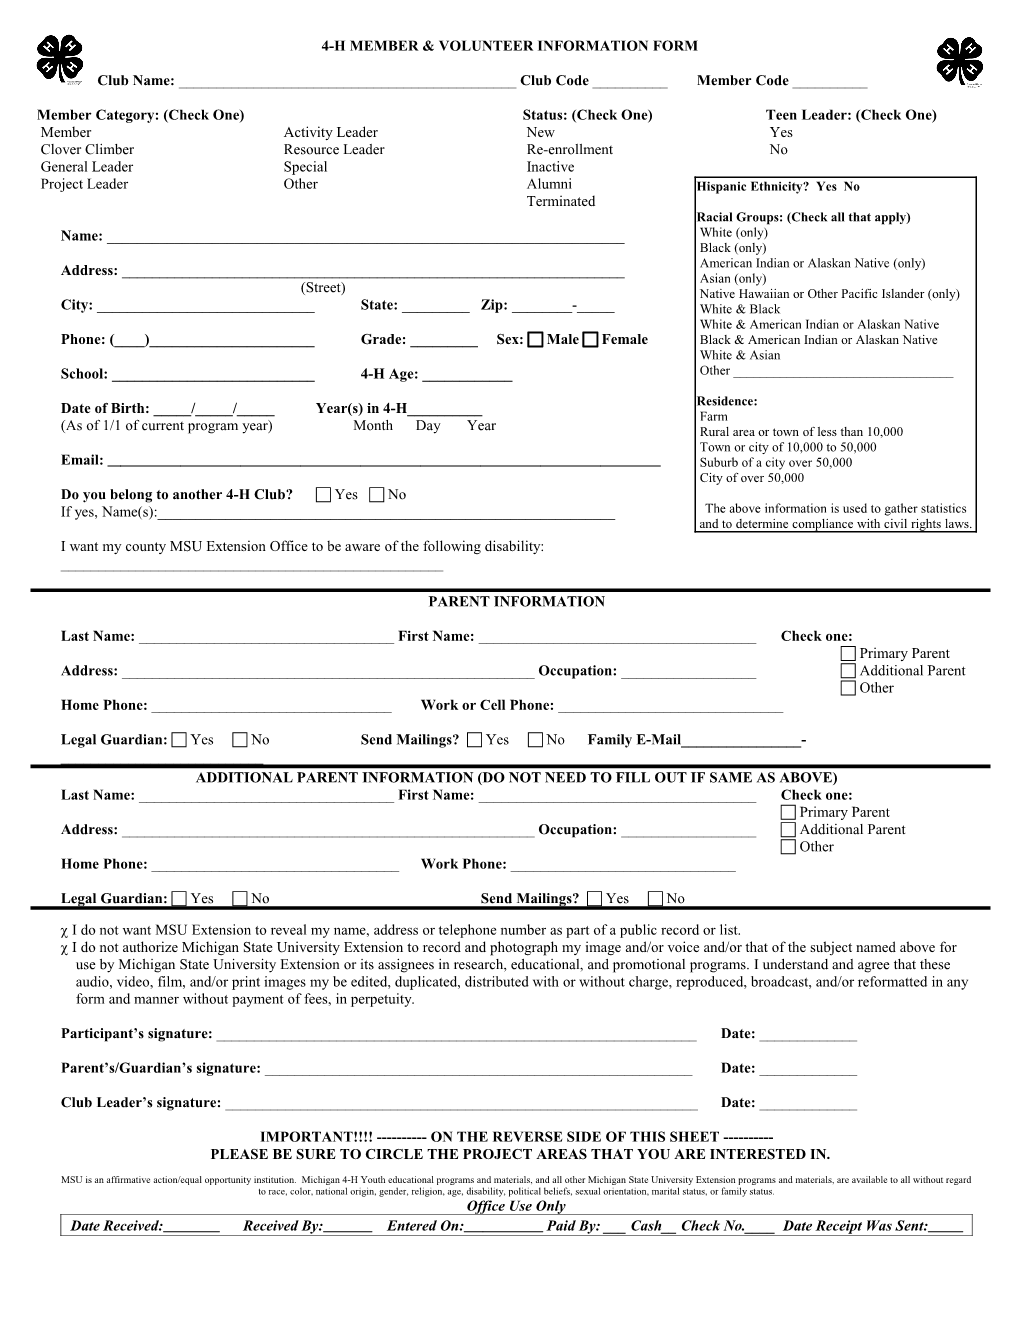 4-H Member Information Form - Oakland County